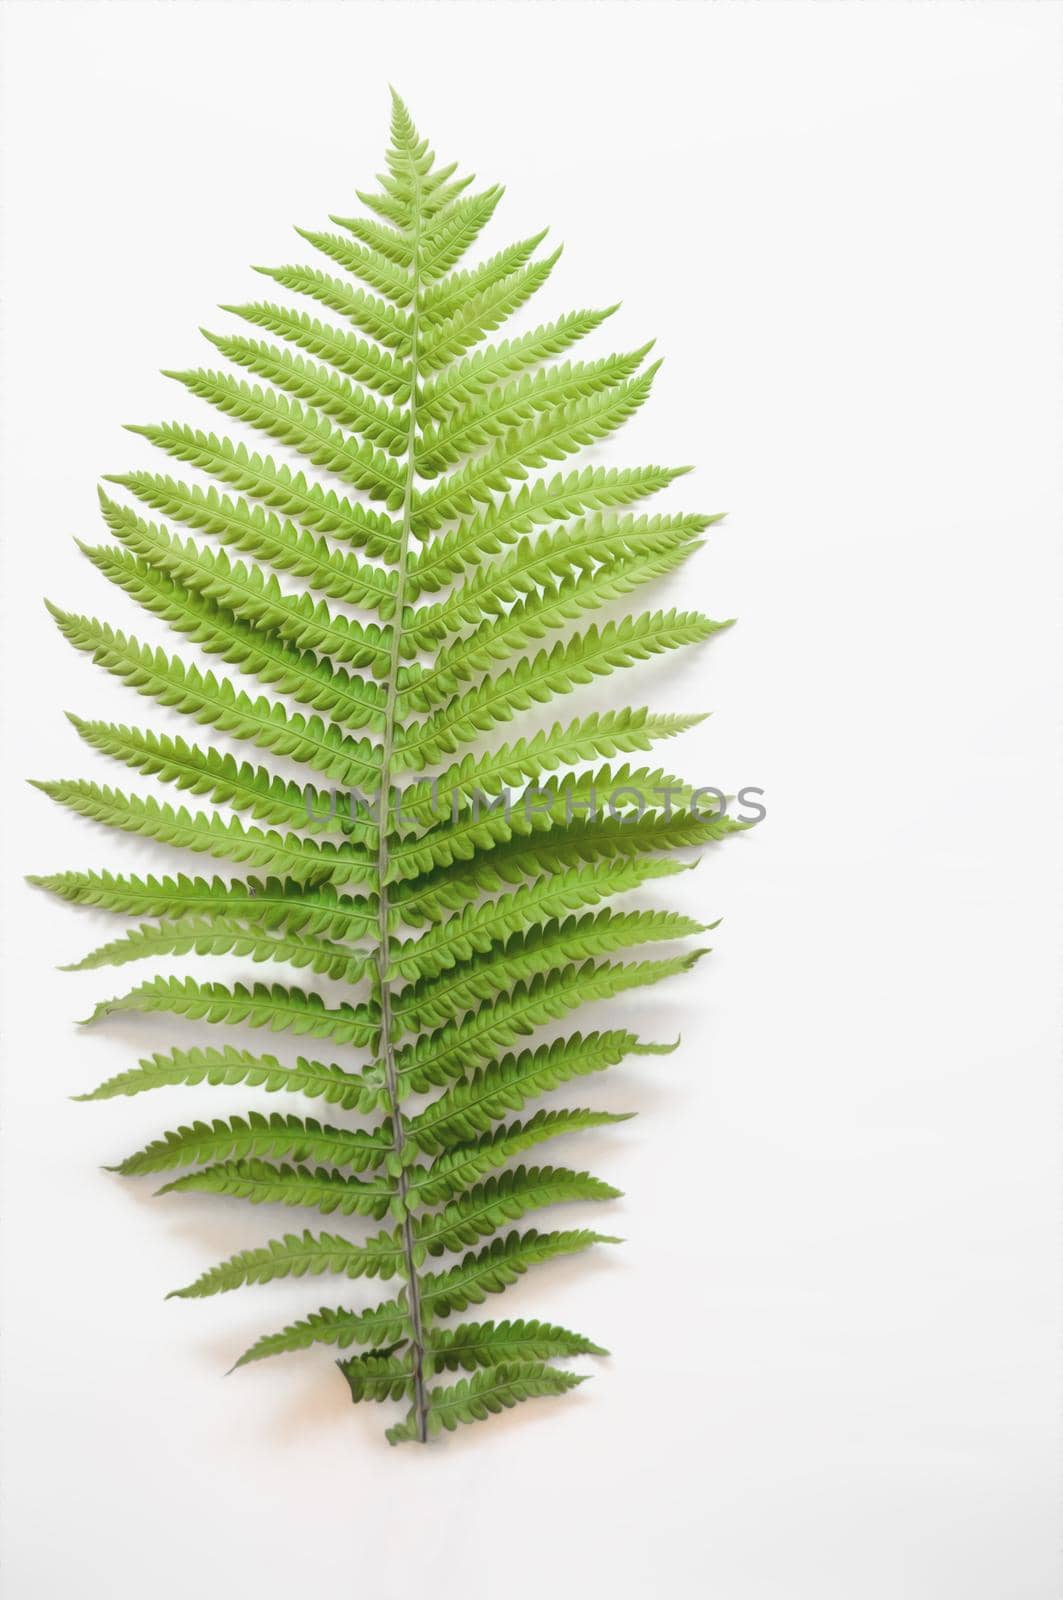 fern leaf on paper background by ozornina